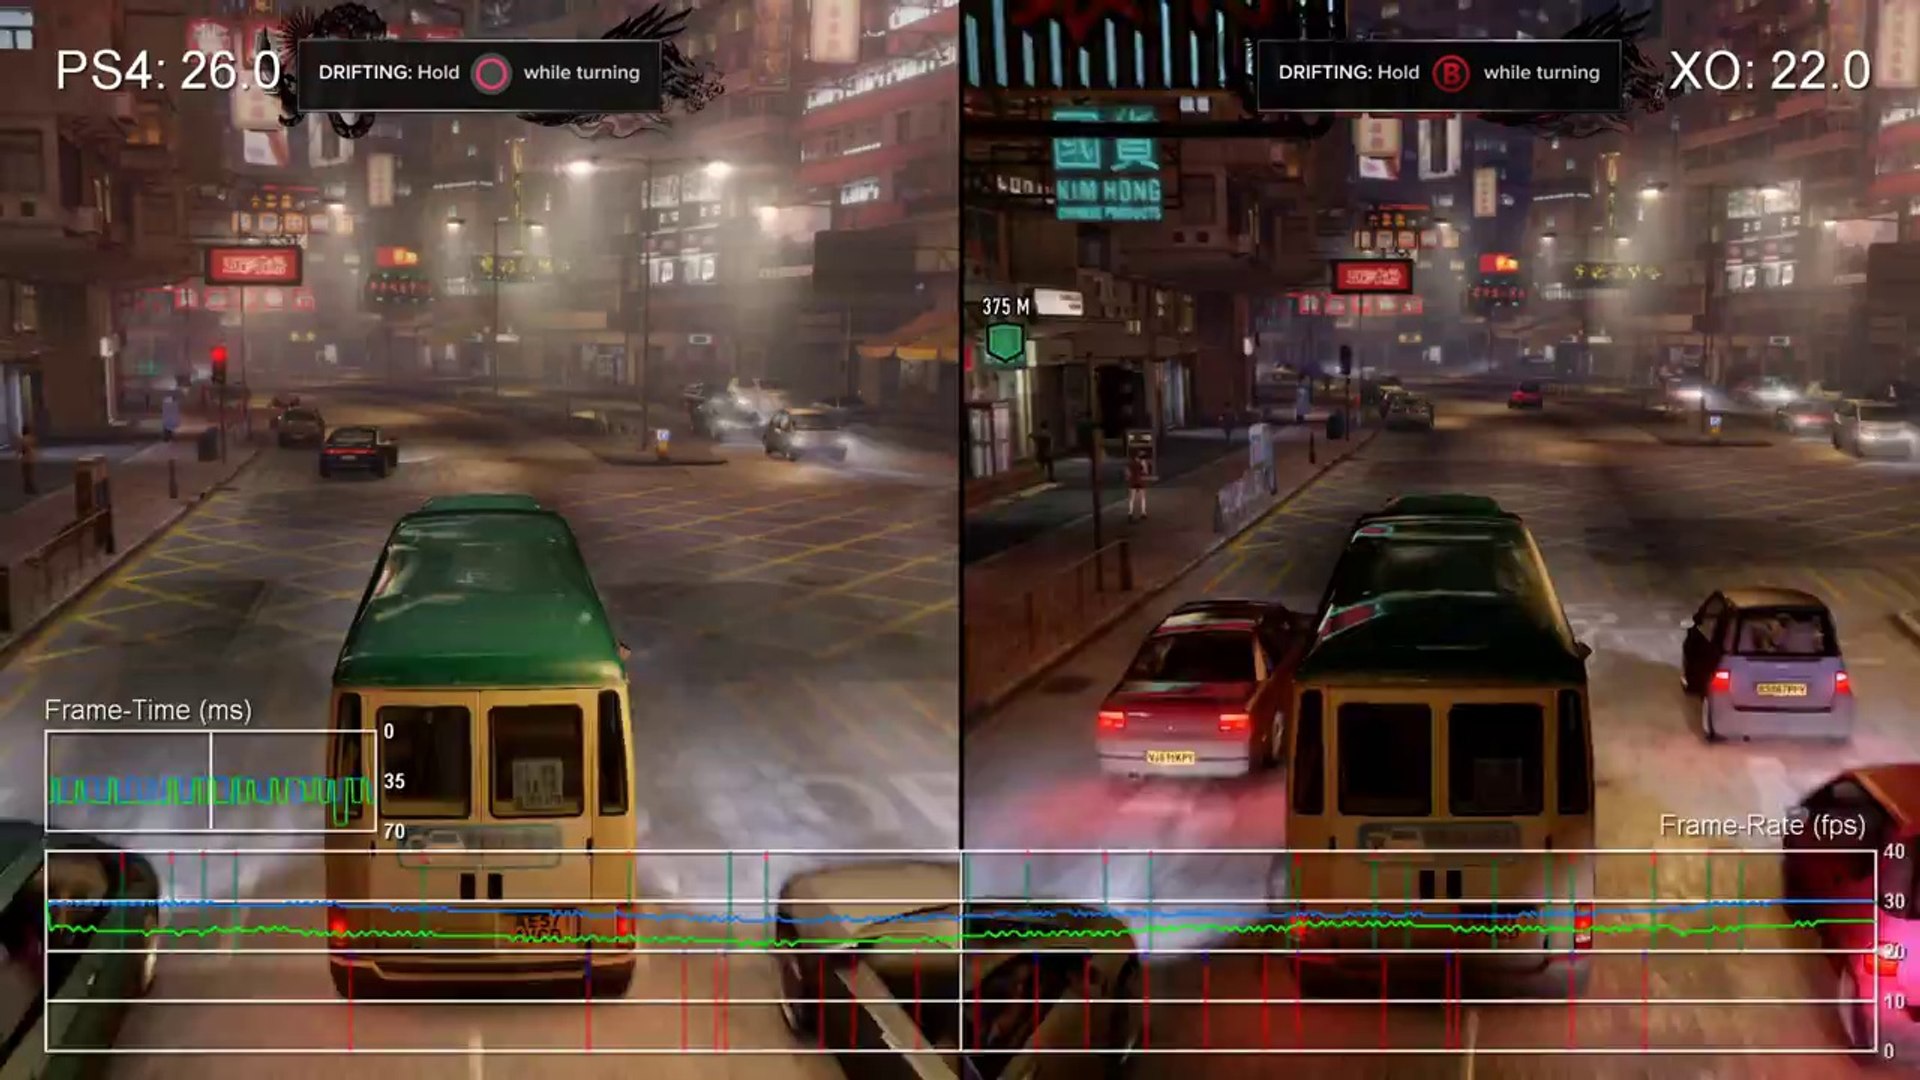 mechanisch Oorzaak wasserette Sleeping Dogs Definitive Edition : PS4 vs Xbox One Frame-Rate Test - video  Dailymotion